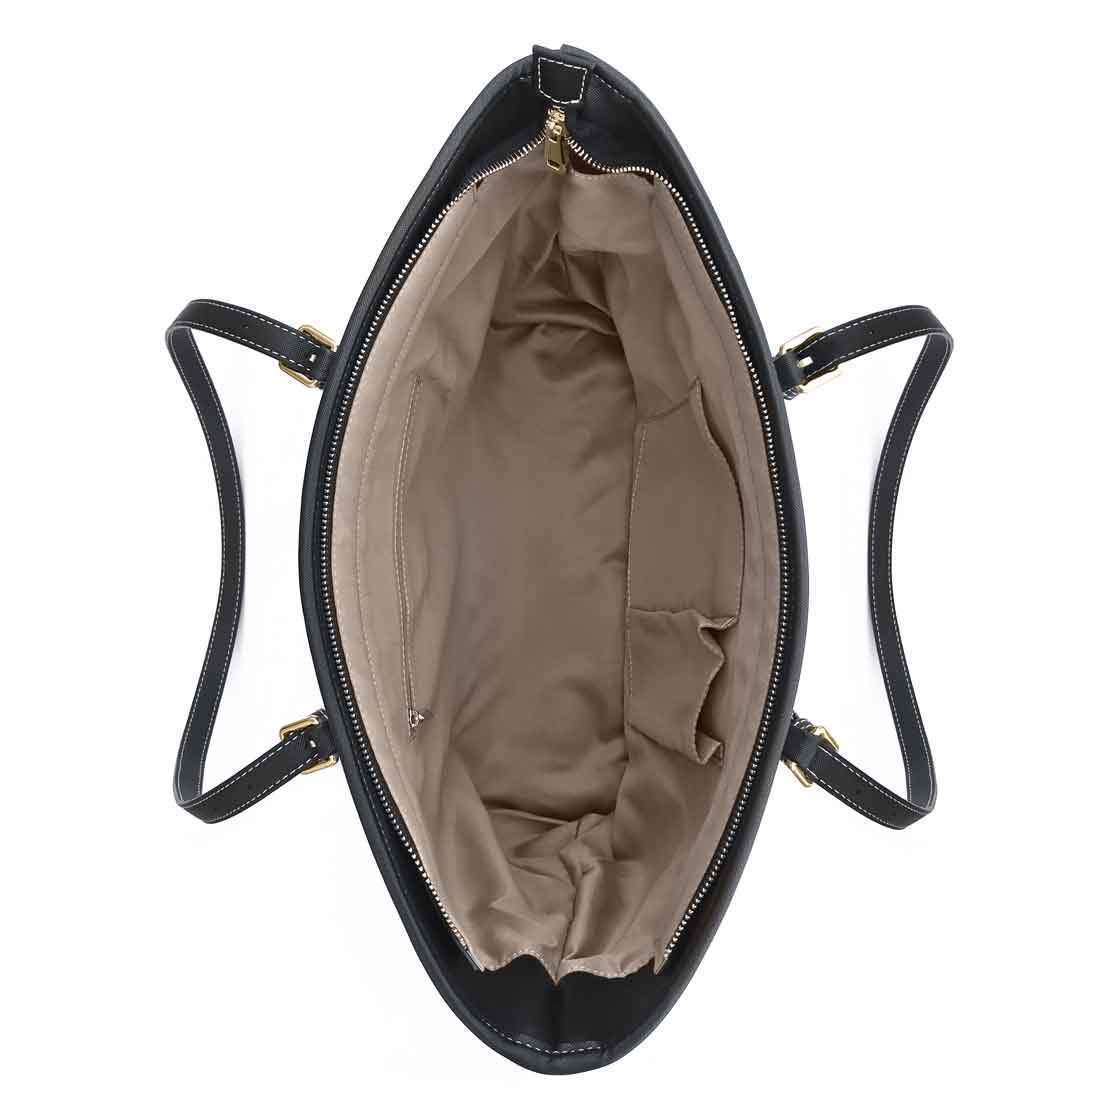 The Pieta Tote Bag (Black) - VENXARA®